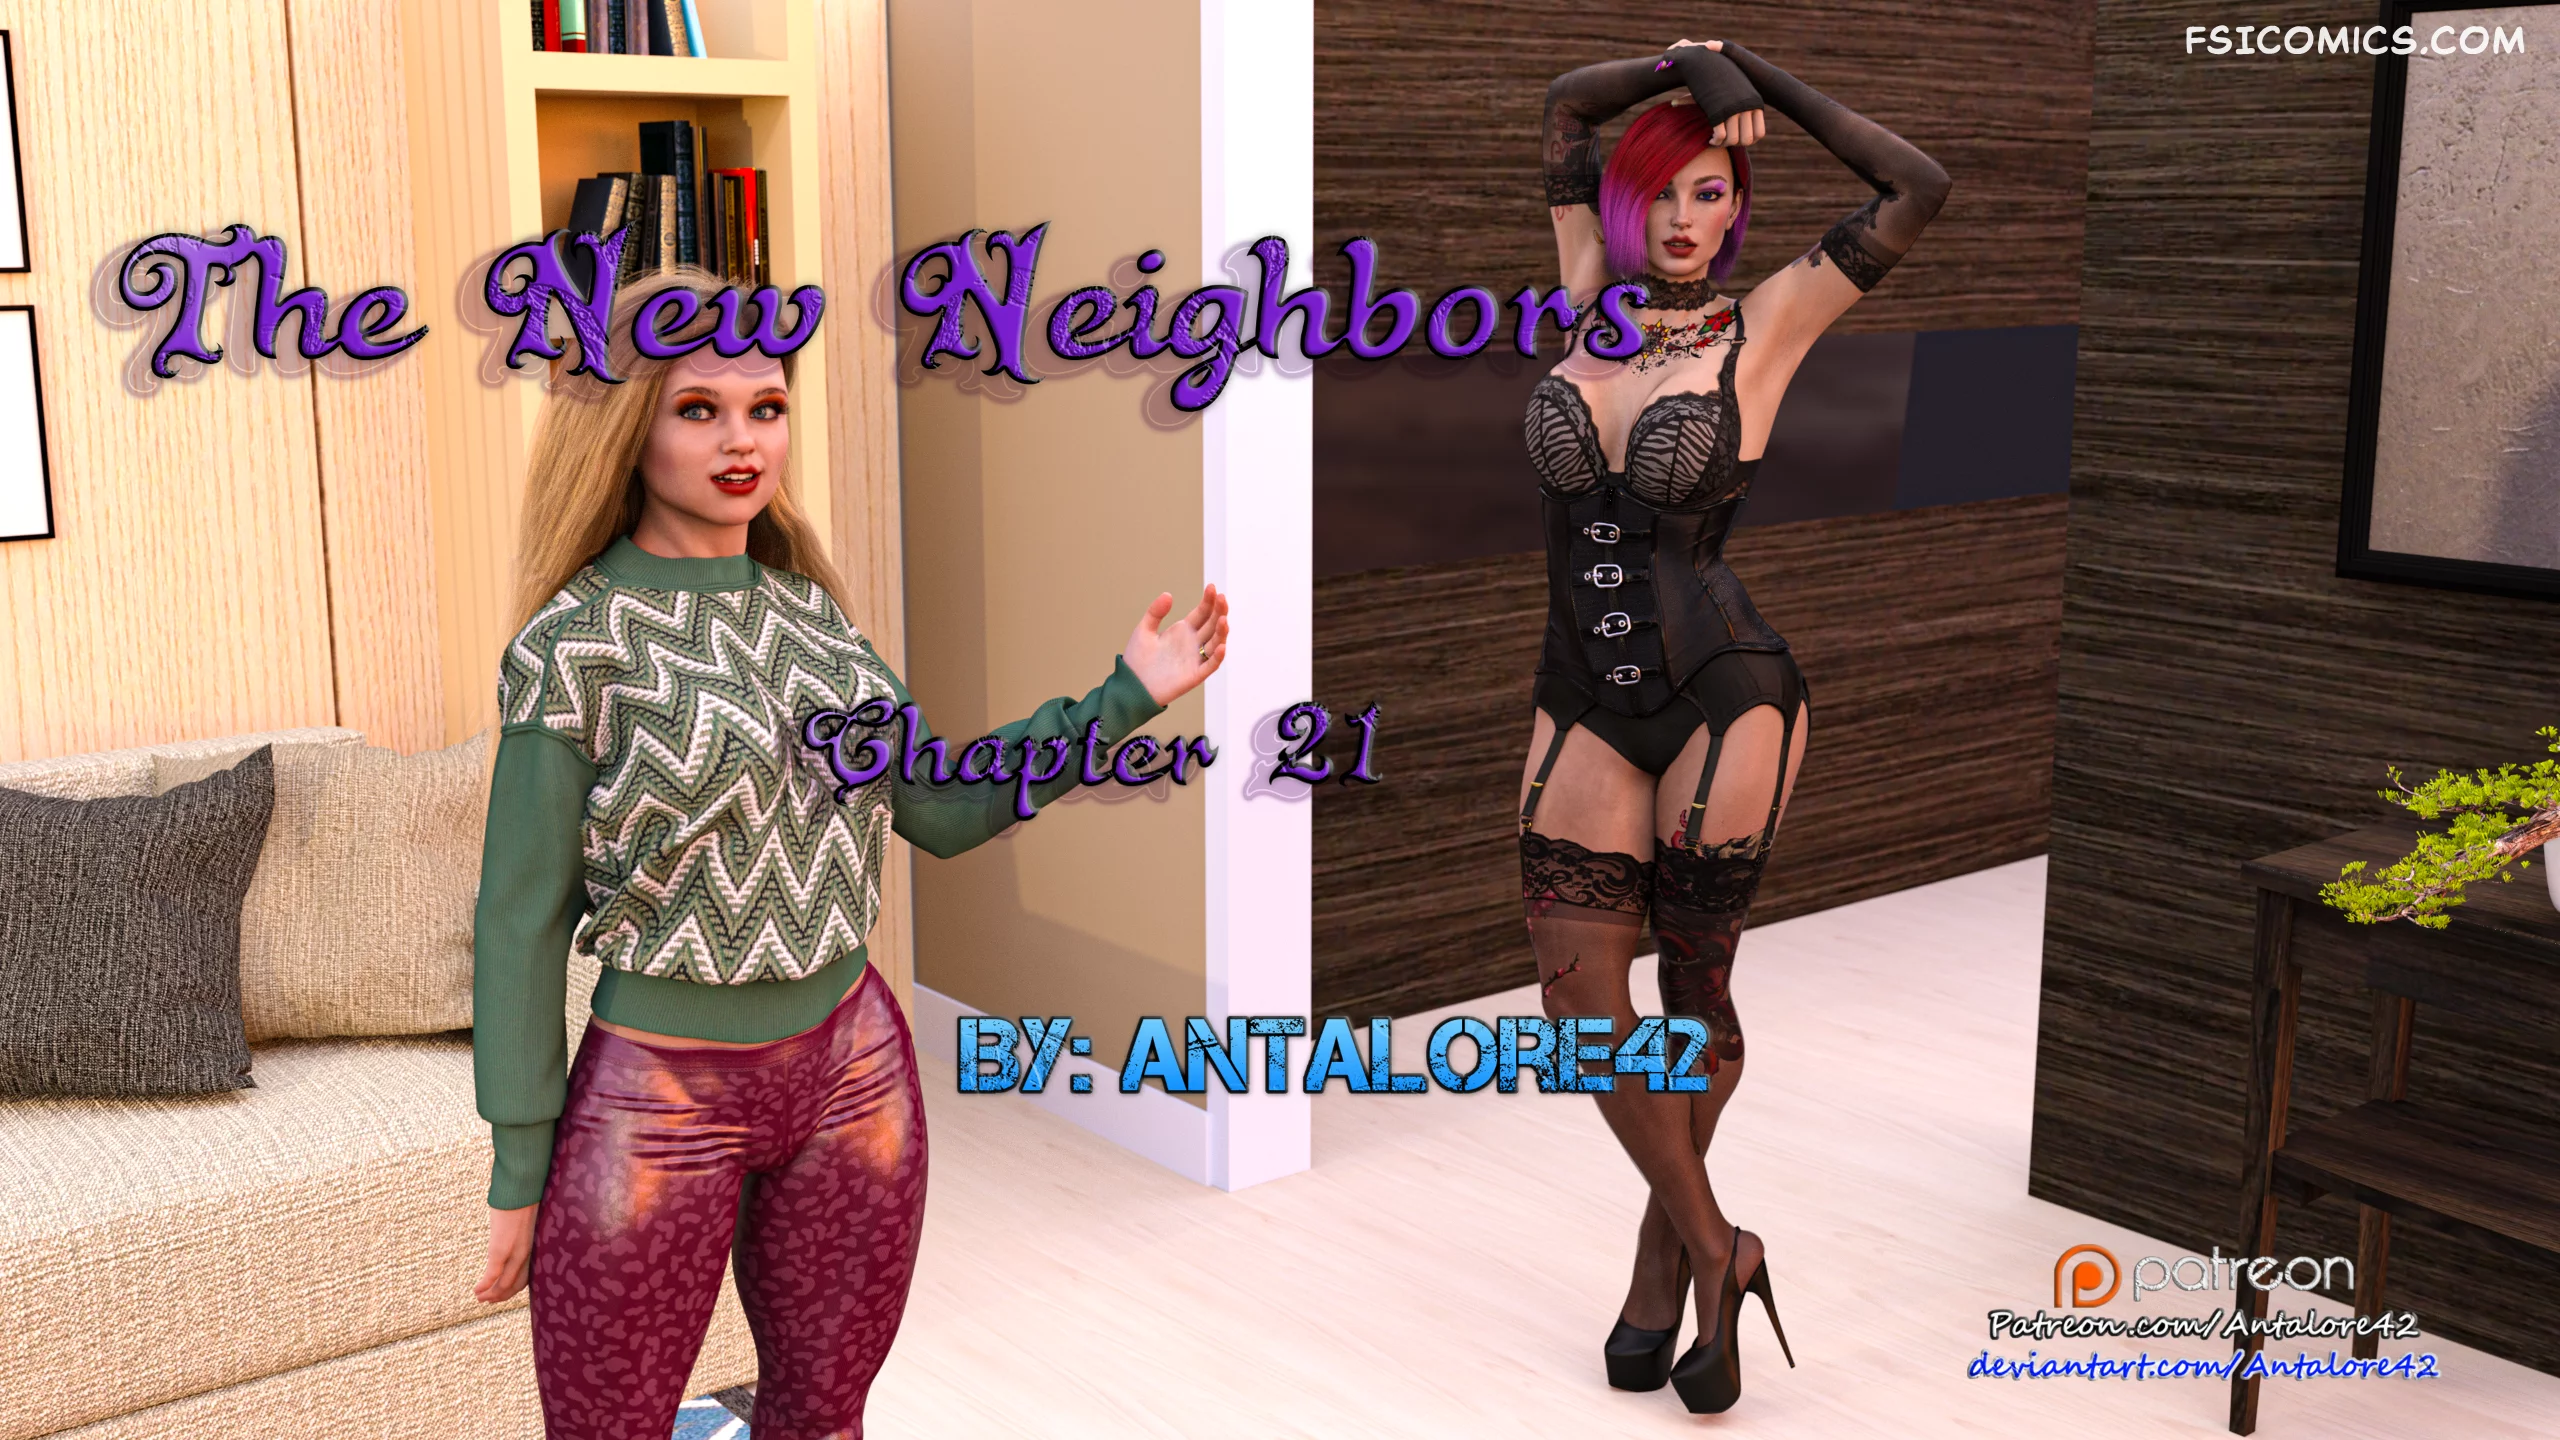 The New Neighbors Chapter 21 – Antalore42 - 99 - FSIComics